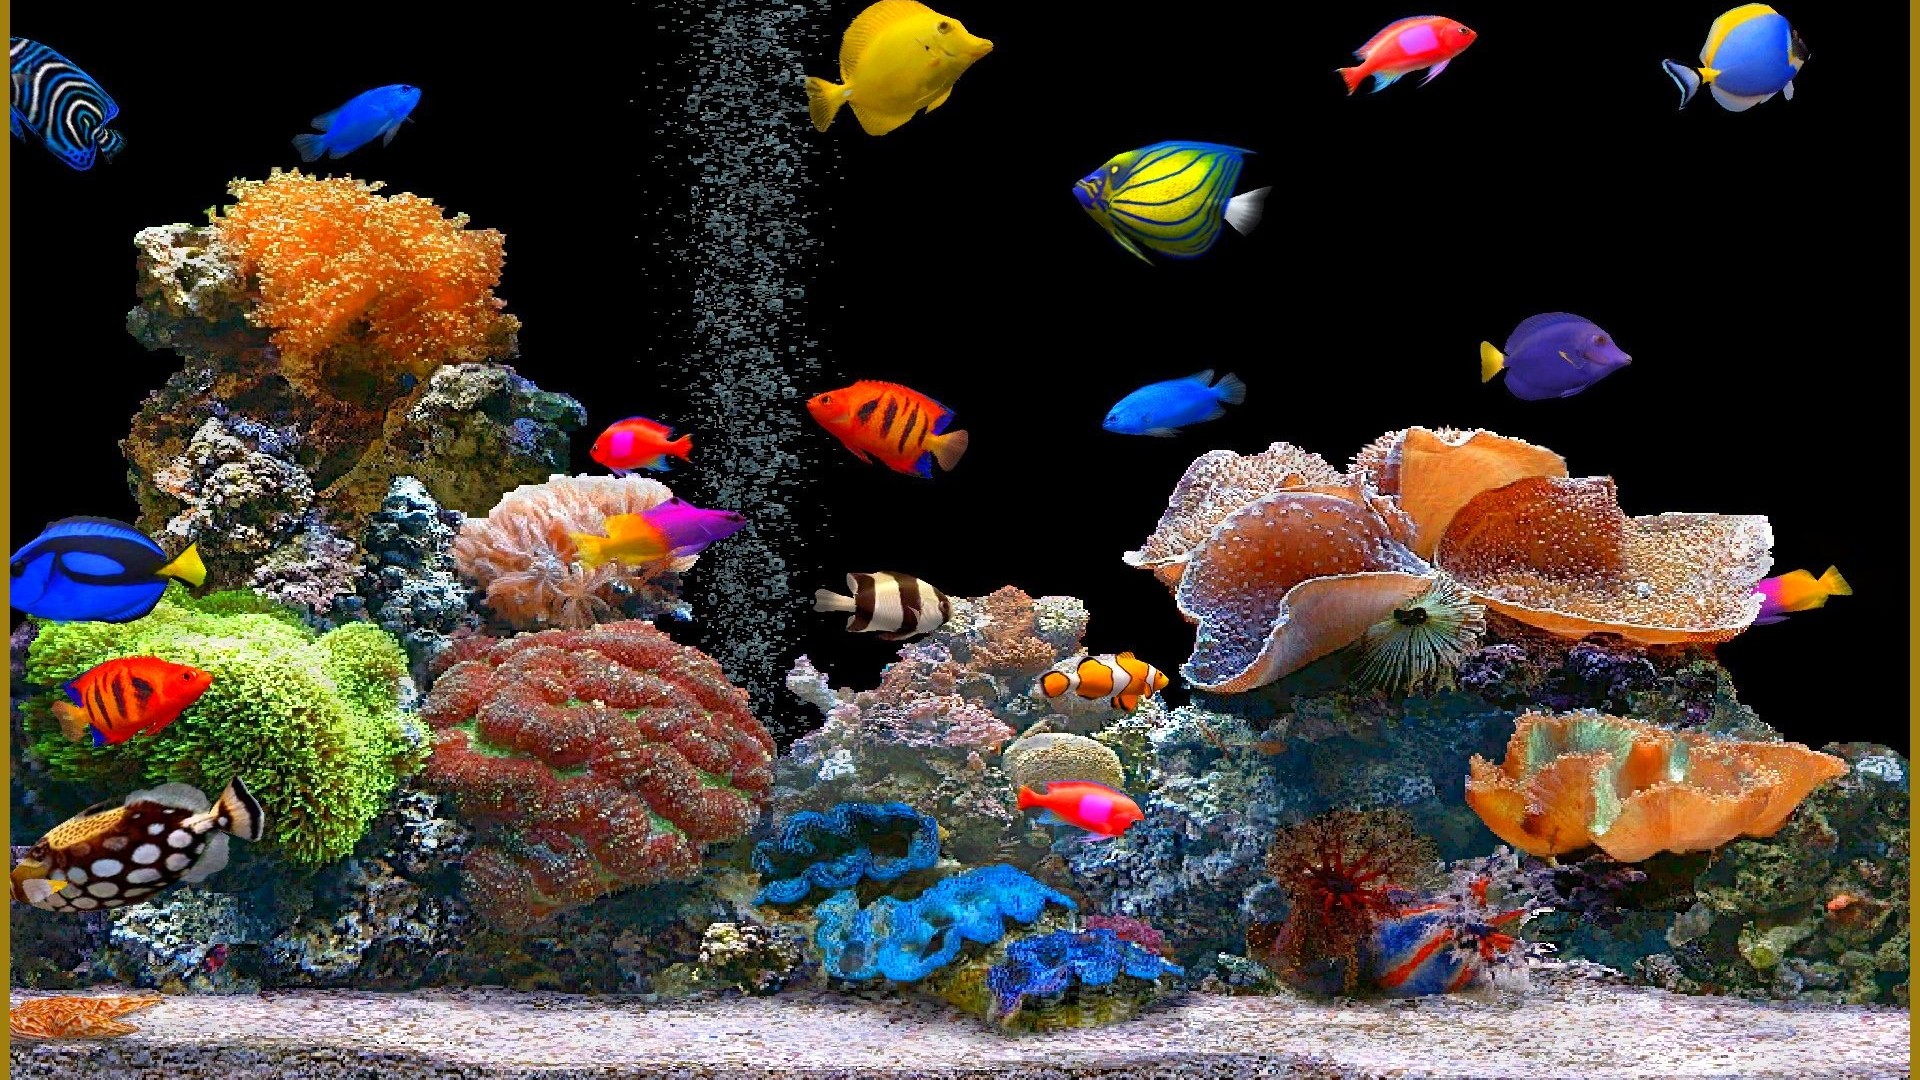 Animated Desktop Wallpaper Fish for Windows 81 All for Windows 10